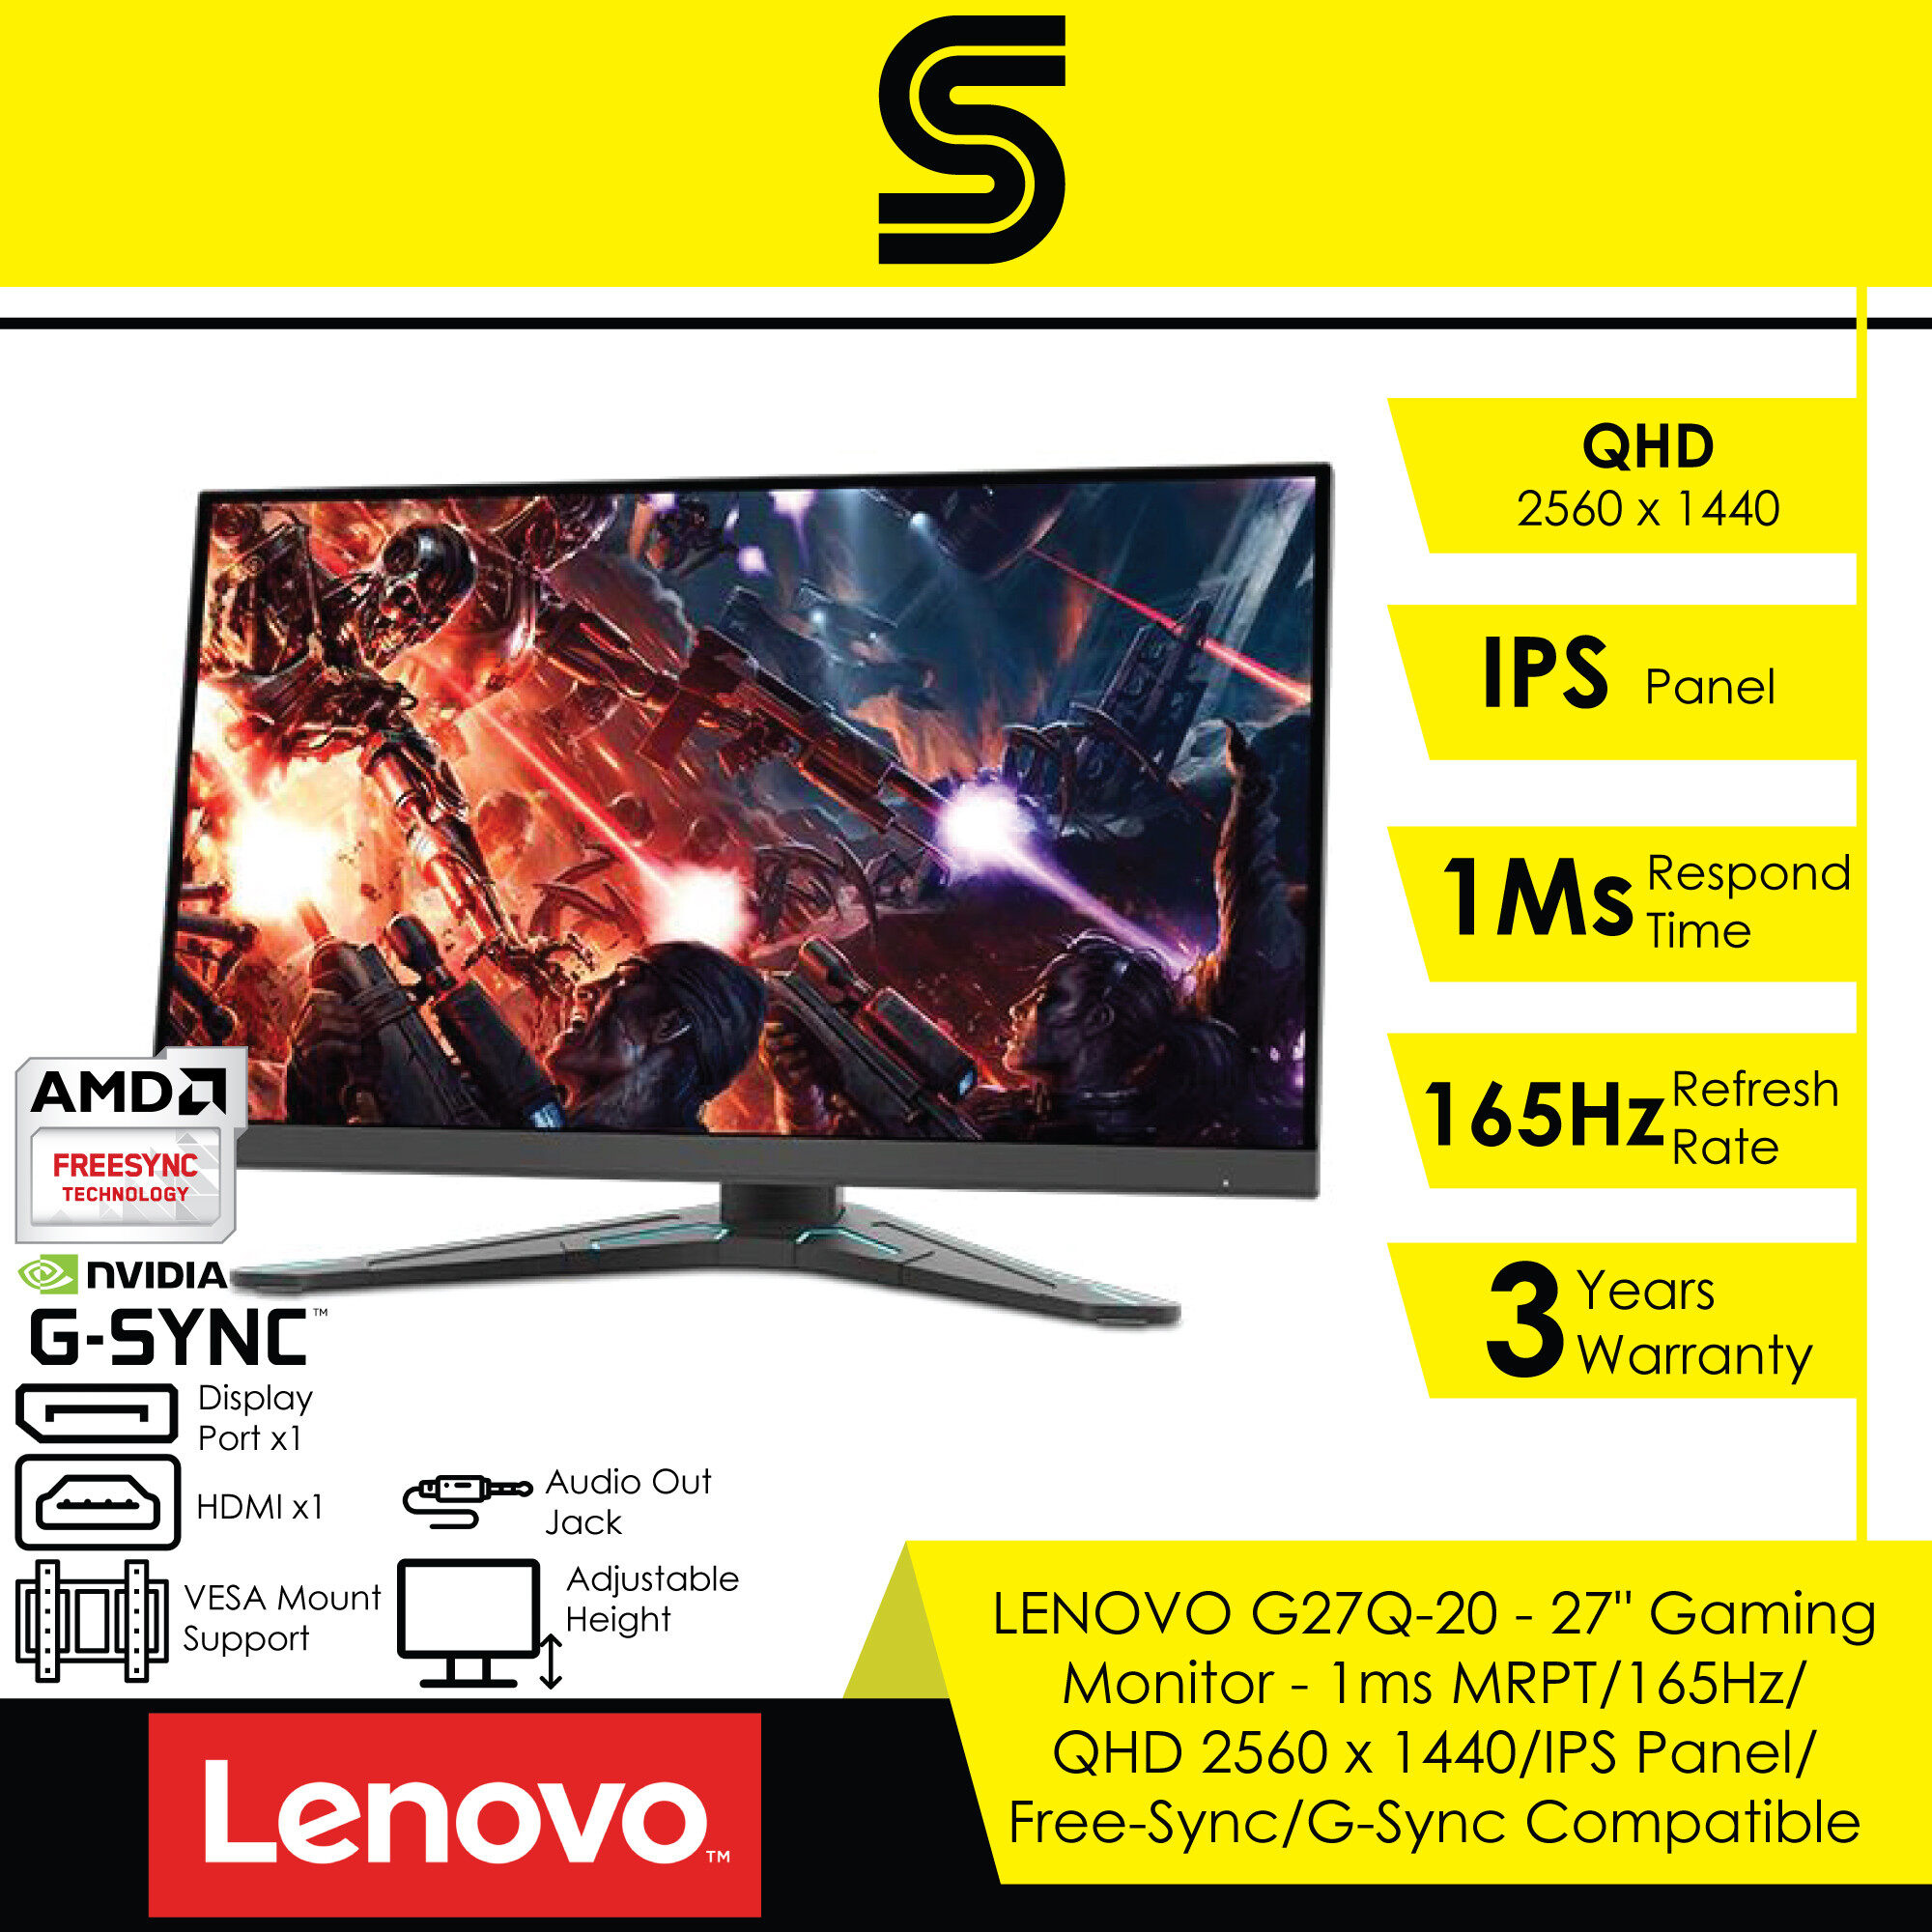 LENOVO G27Q-20 - 27" Gaming Monitor - 1ms MRPT/165Hz/ QHD 2560 x 1440/IPS Panel/ Free-Sync/G-Sync Compatible